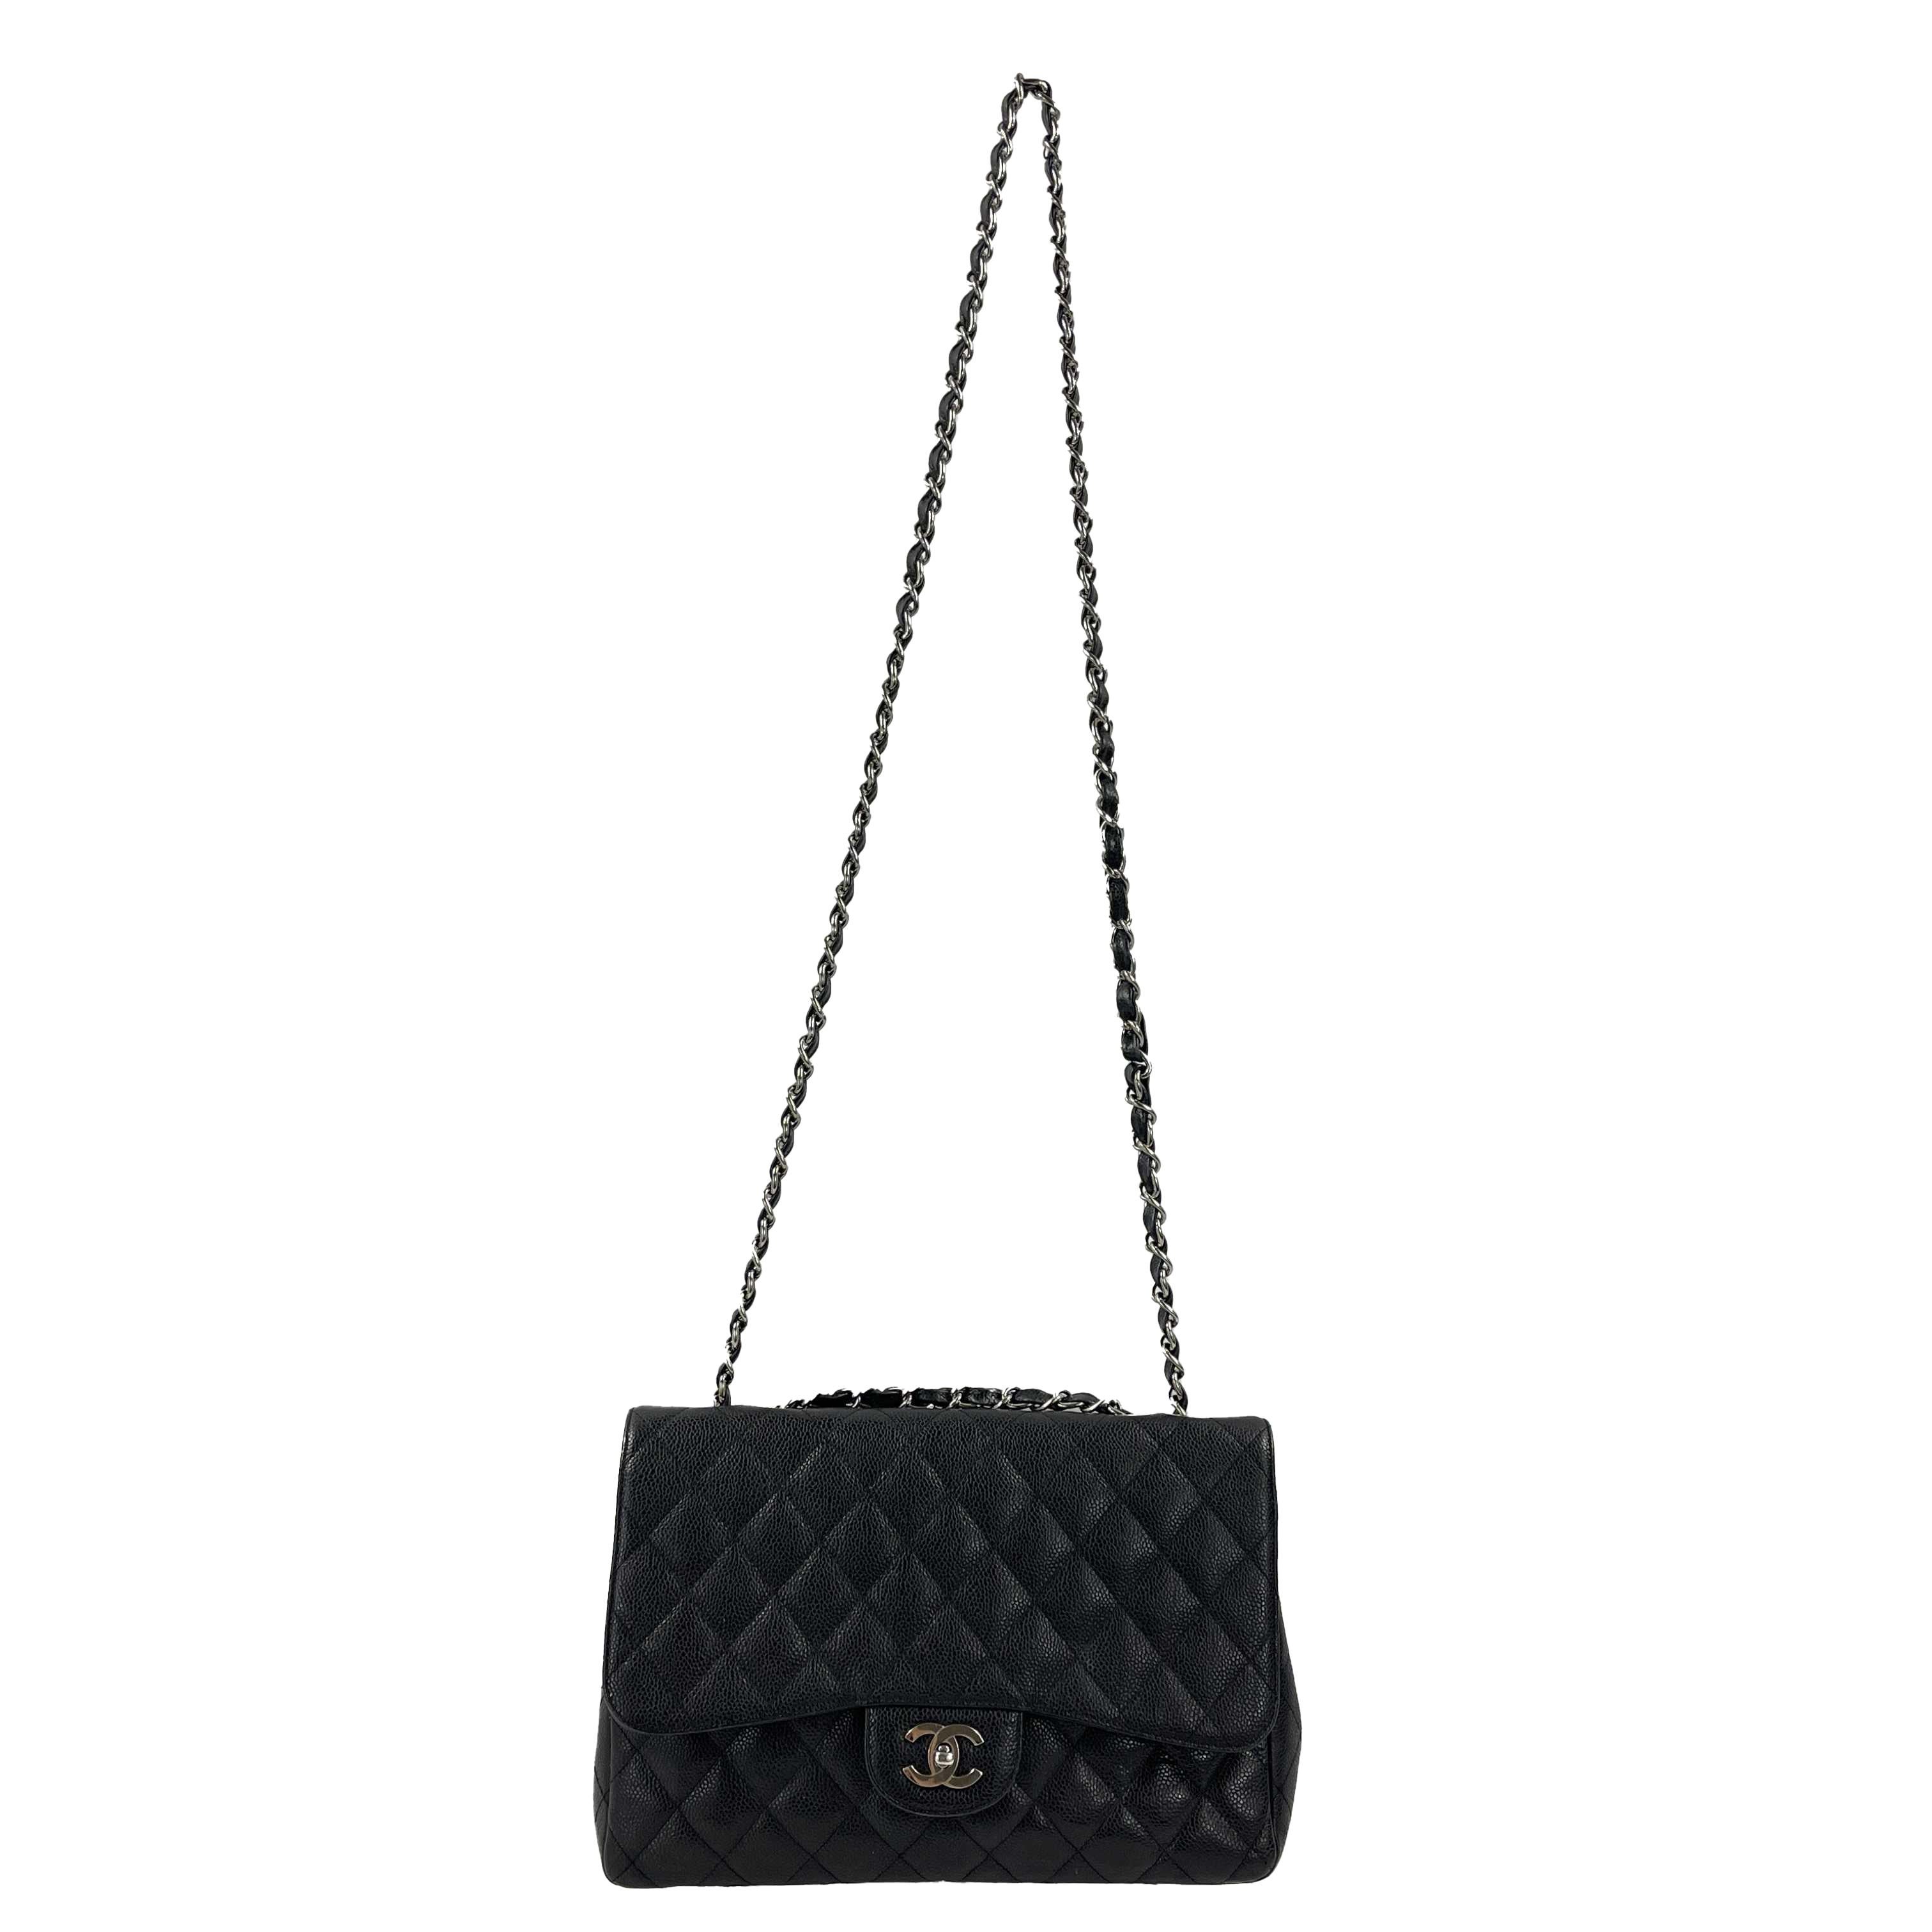 CHANEL - Jumbo Caviar Leather CC Classic Flap - Black / Silver Shoulder Bag 3